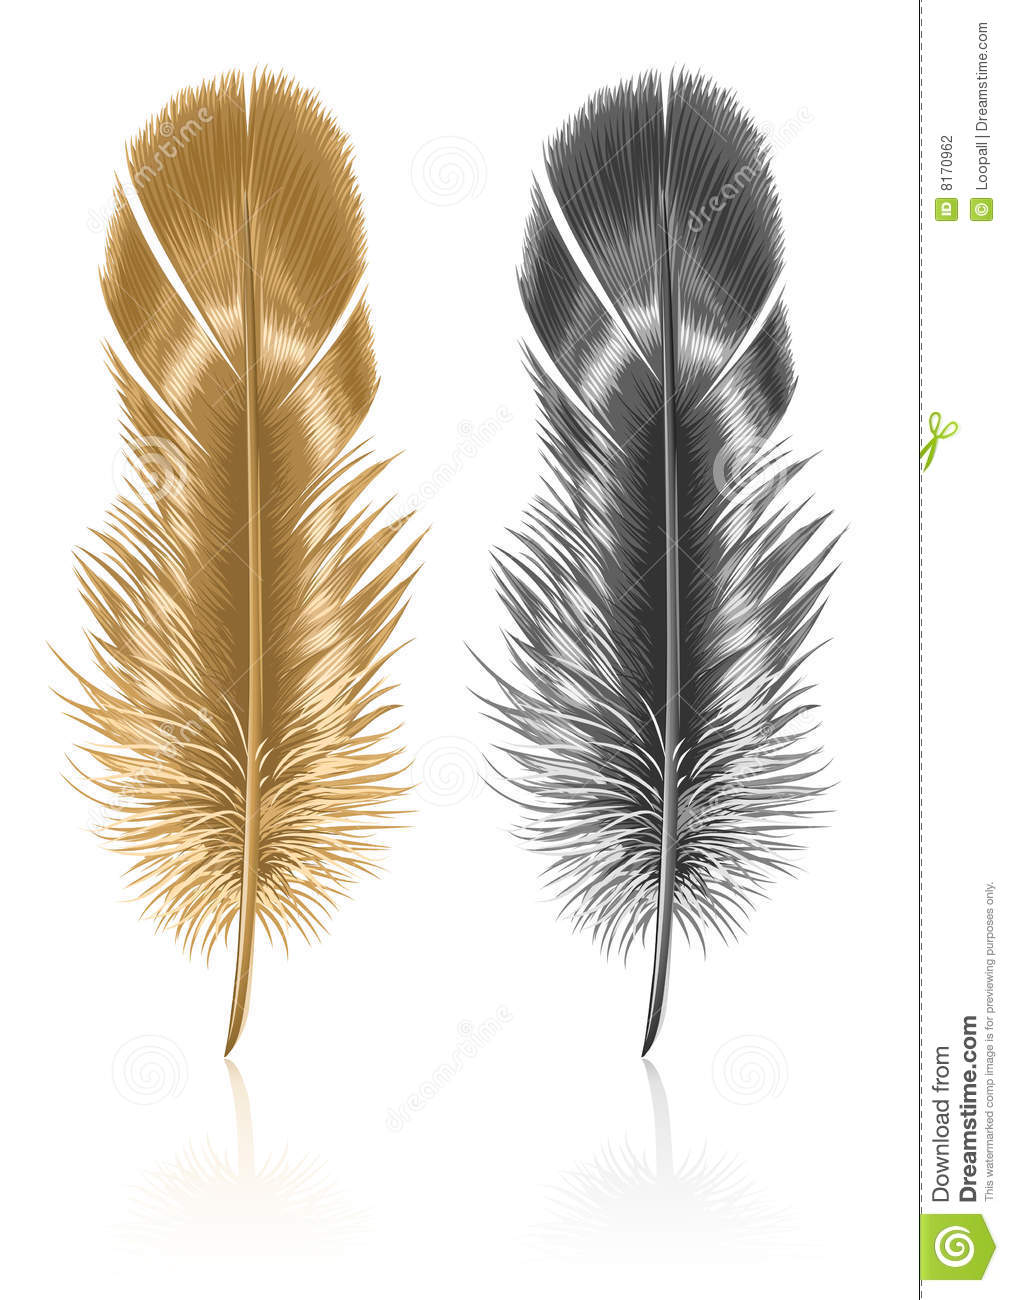 Bird Feather Isolated On White Background Stock Photography   Image